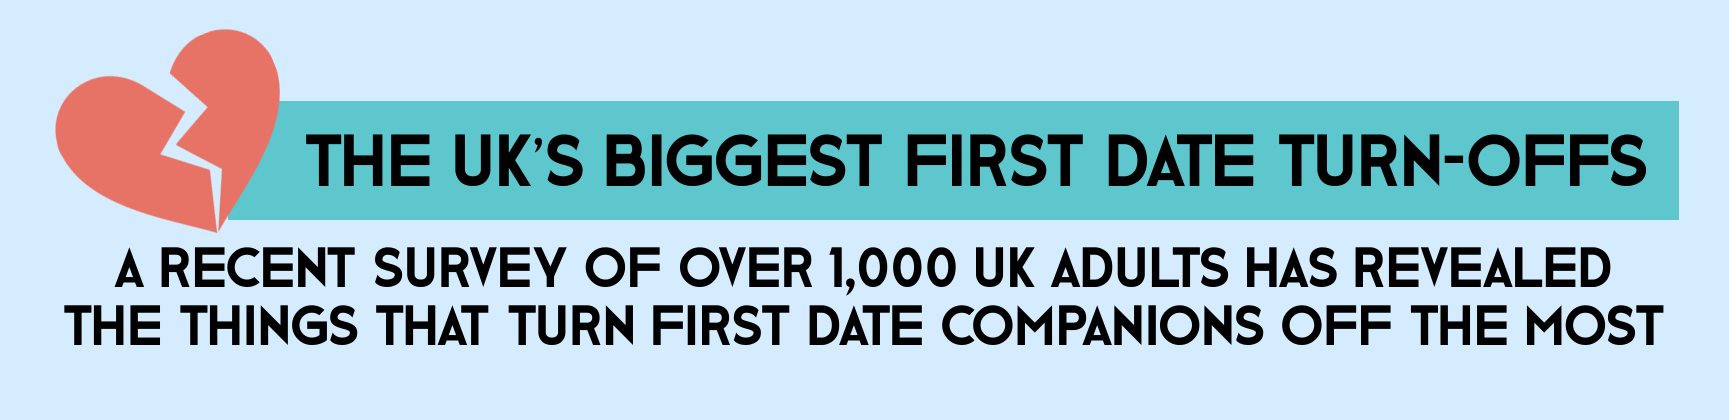 UK's biggest first date turn-offs